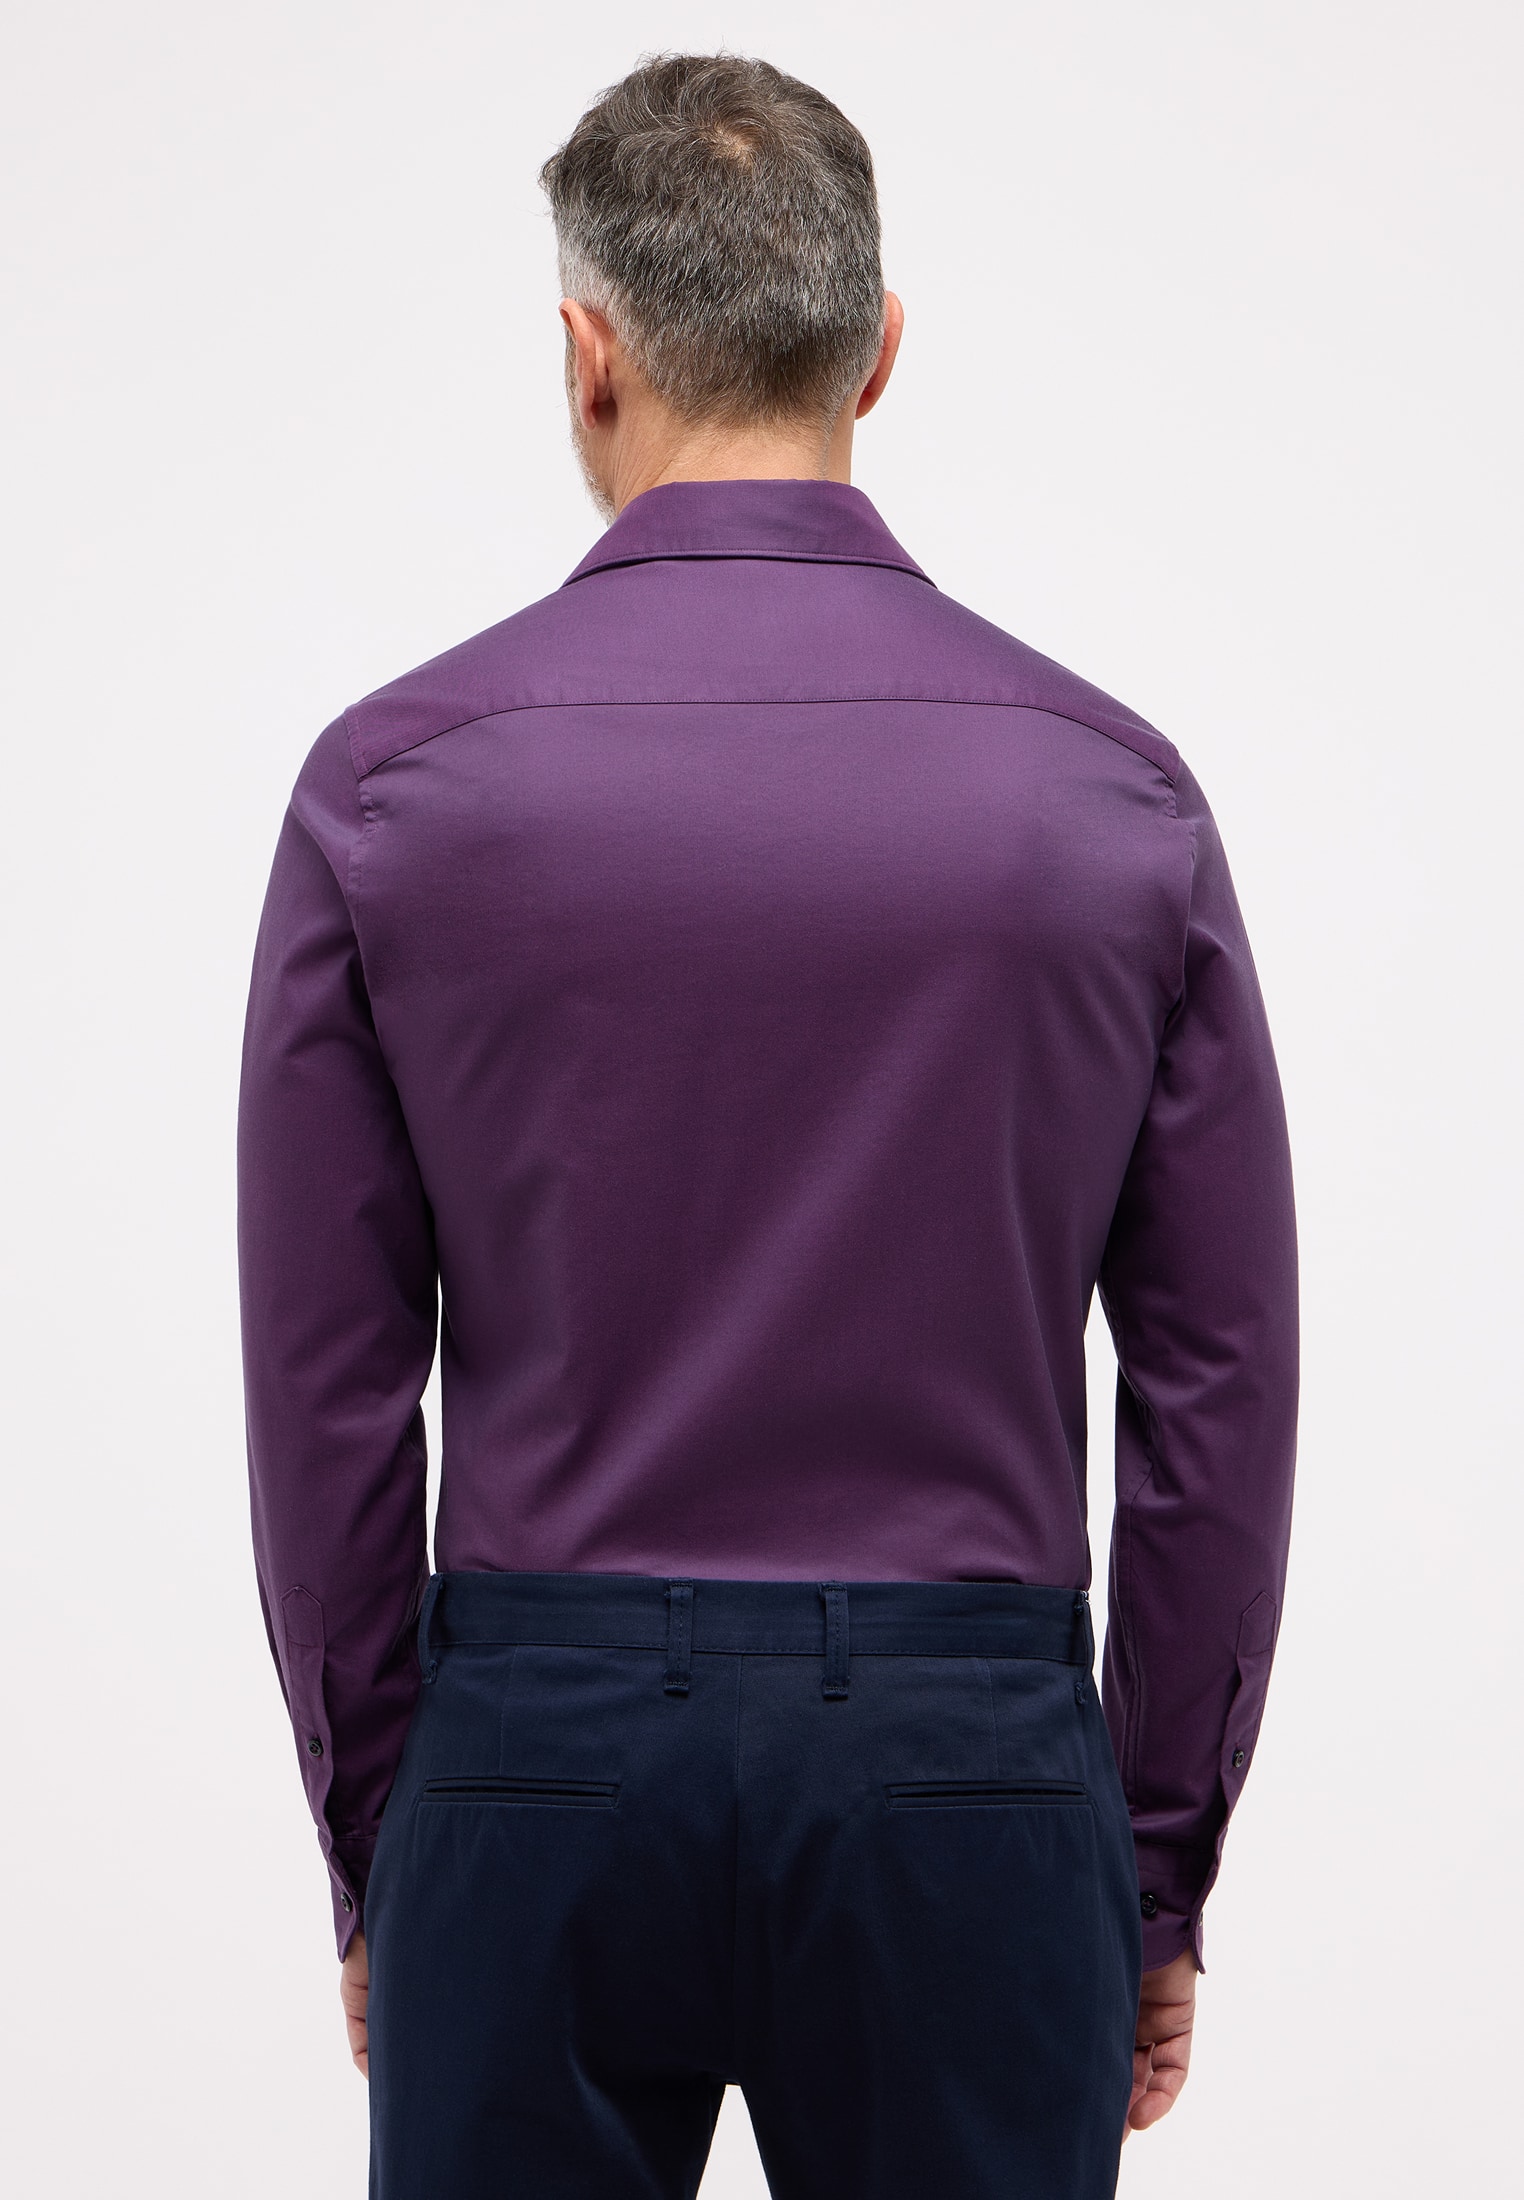 Shirt | SLIM | | 38 burgunder Soft Langarm Luxury FIT in | 1SH03482-05-81-38-1/1 unifarben burgunder